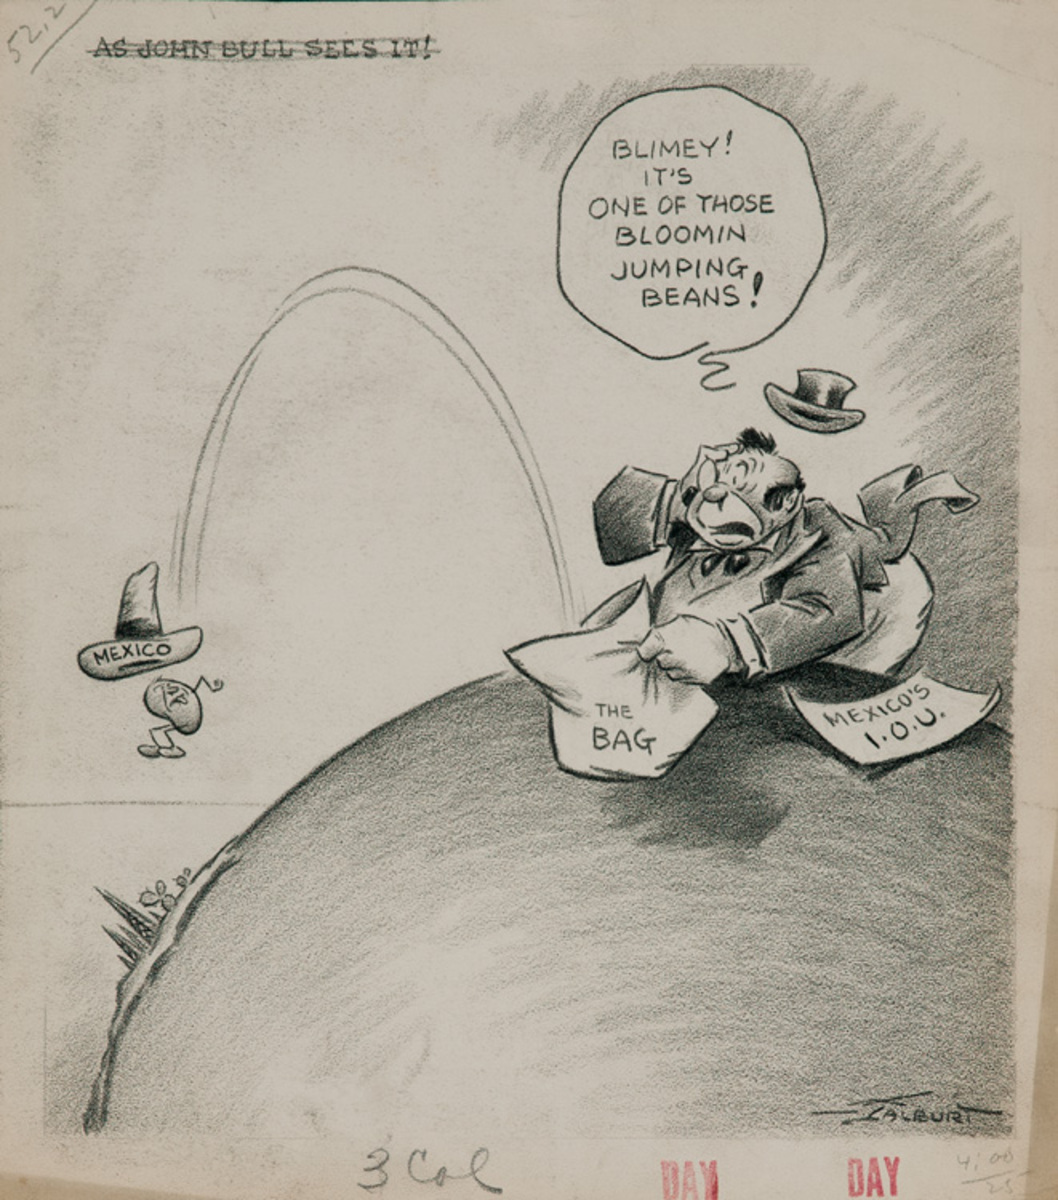 Original Depression Era Political Cartoon Artwork As John Bull Sees It